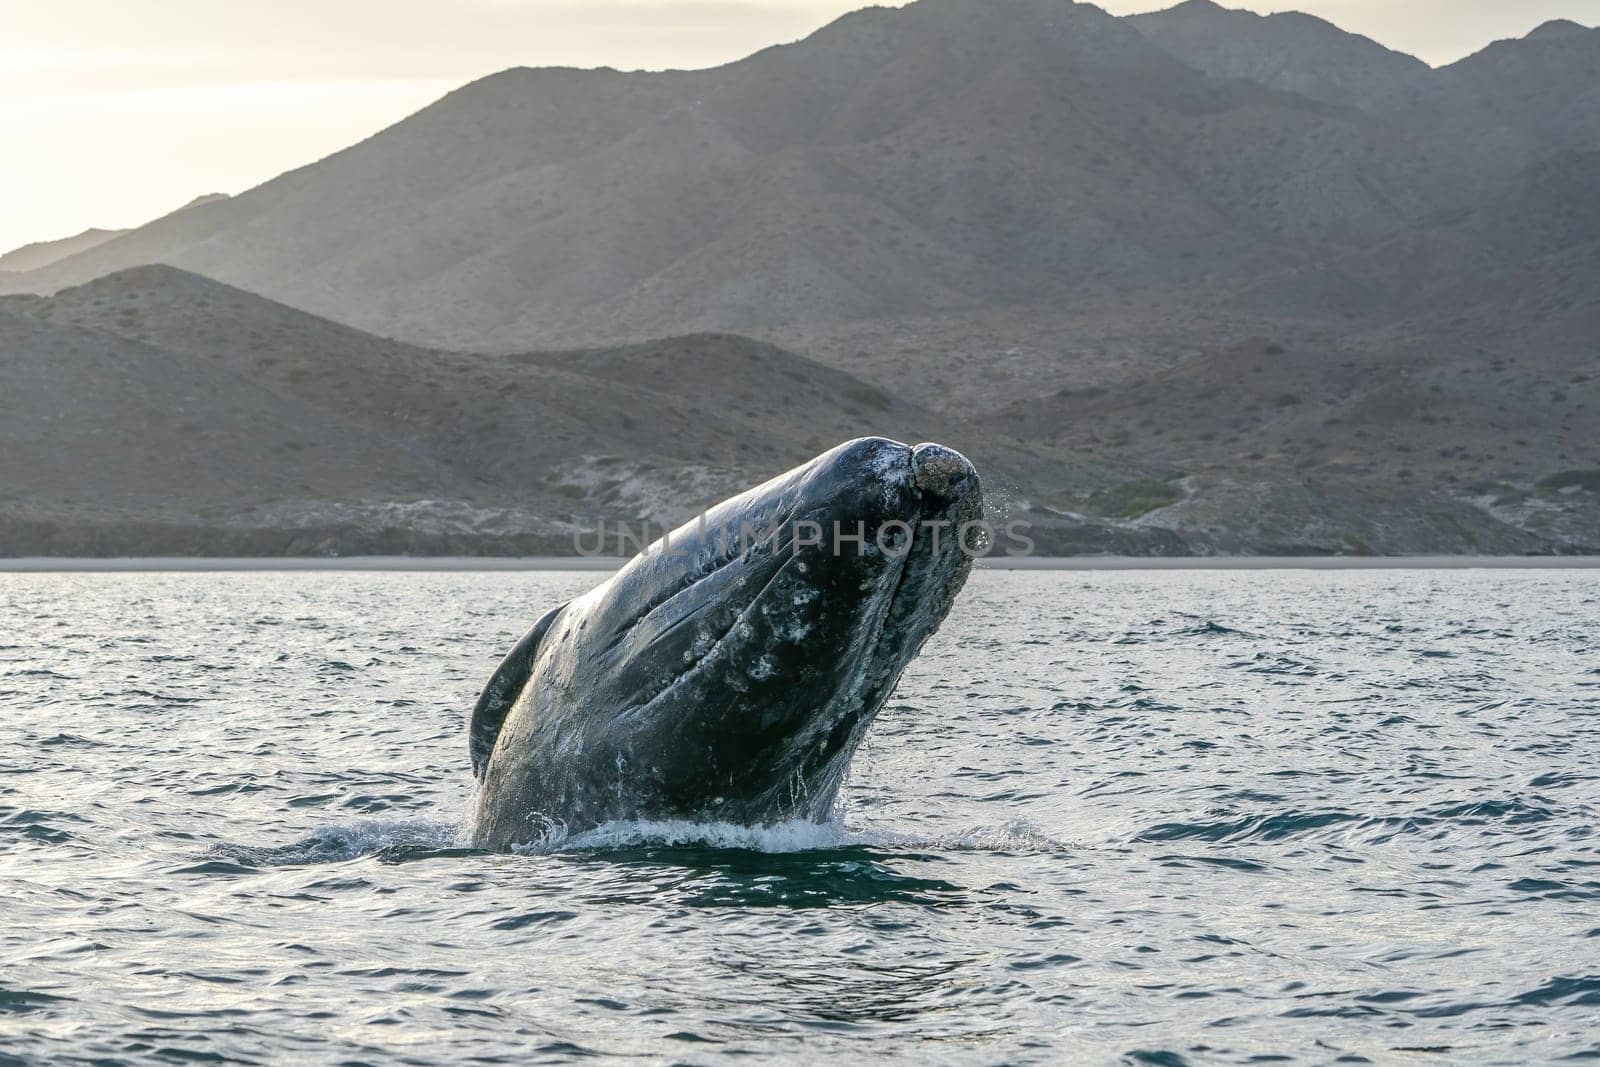 Very rare breaching of a grey whale in baja california sur Mexico